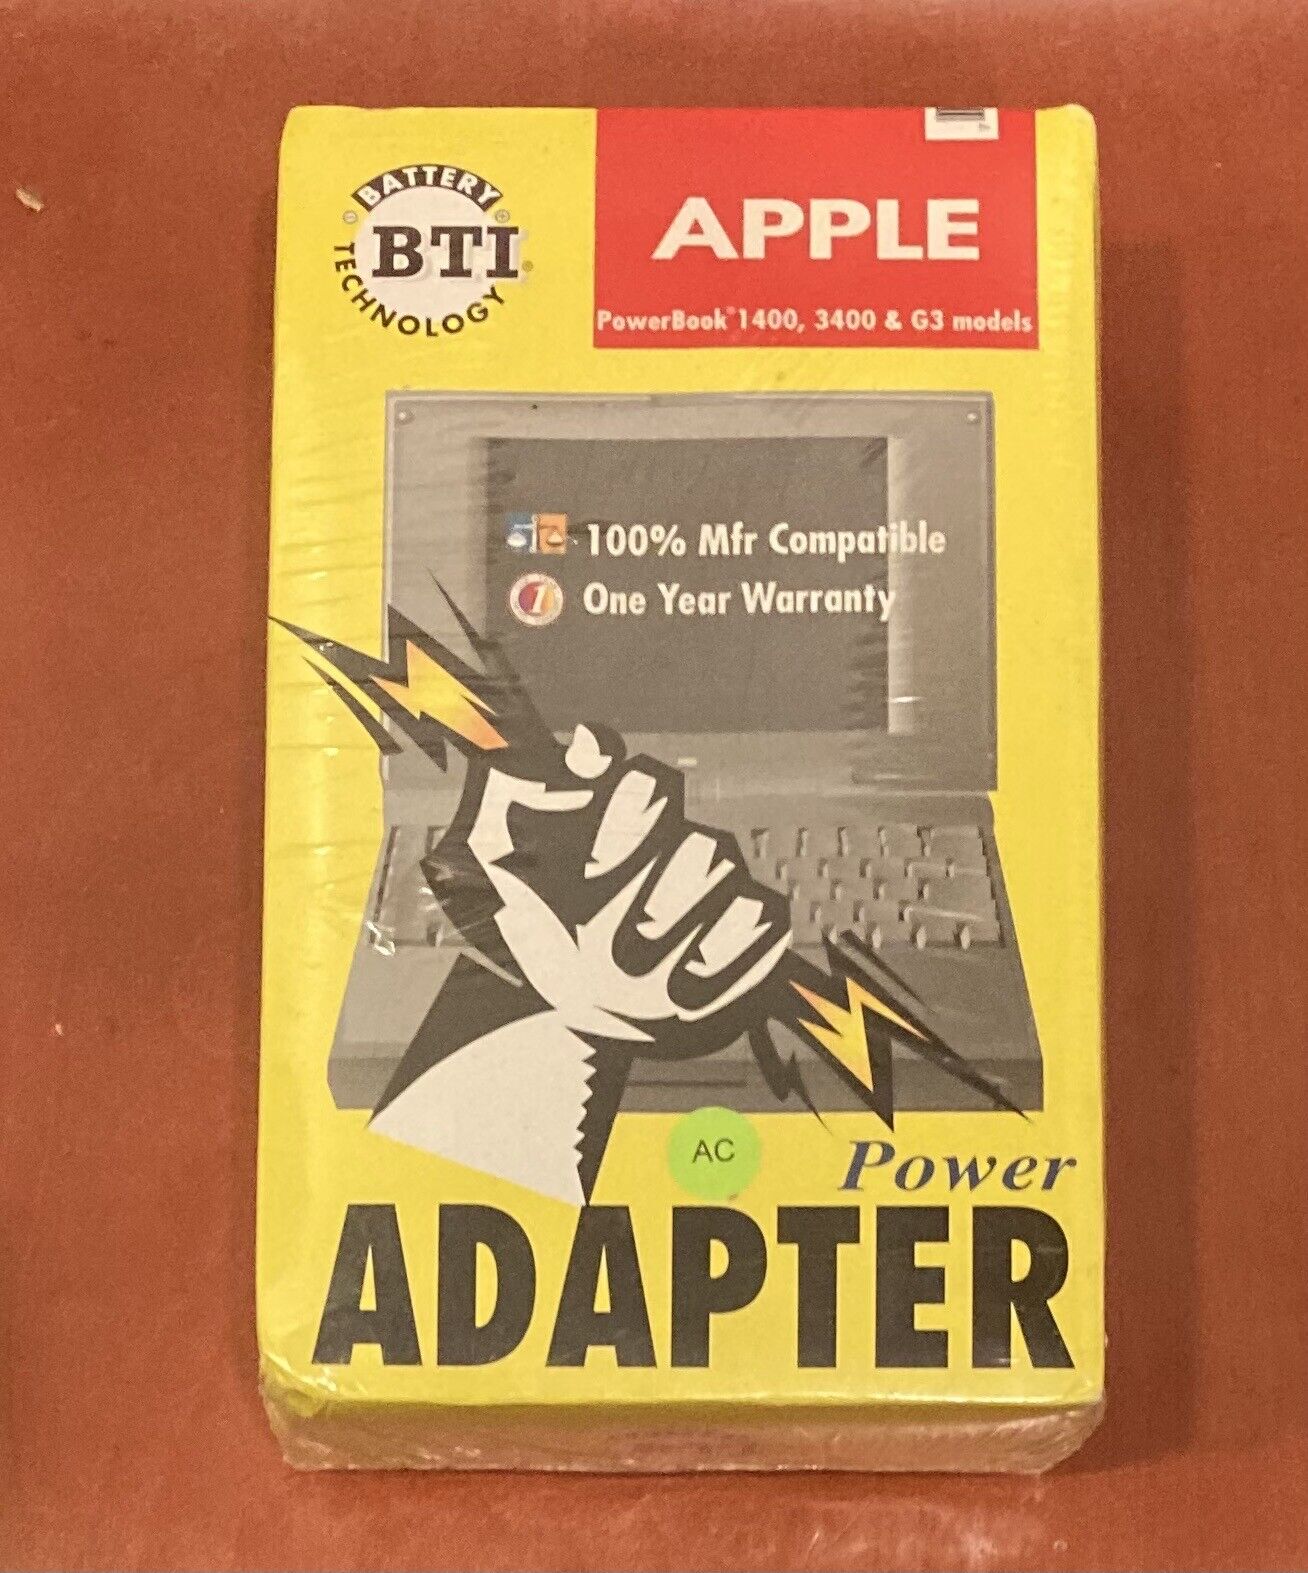 Vintage NOS Apple PowerBook iBook G3 1400 45w AC Power Adapter BTI shrink wrap